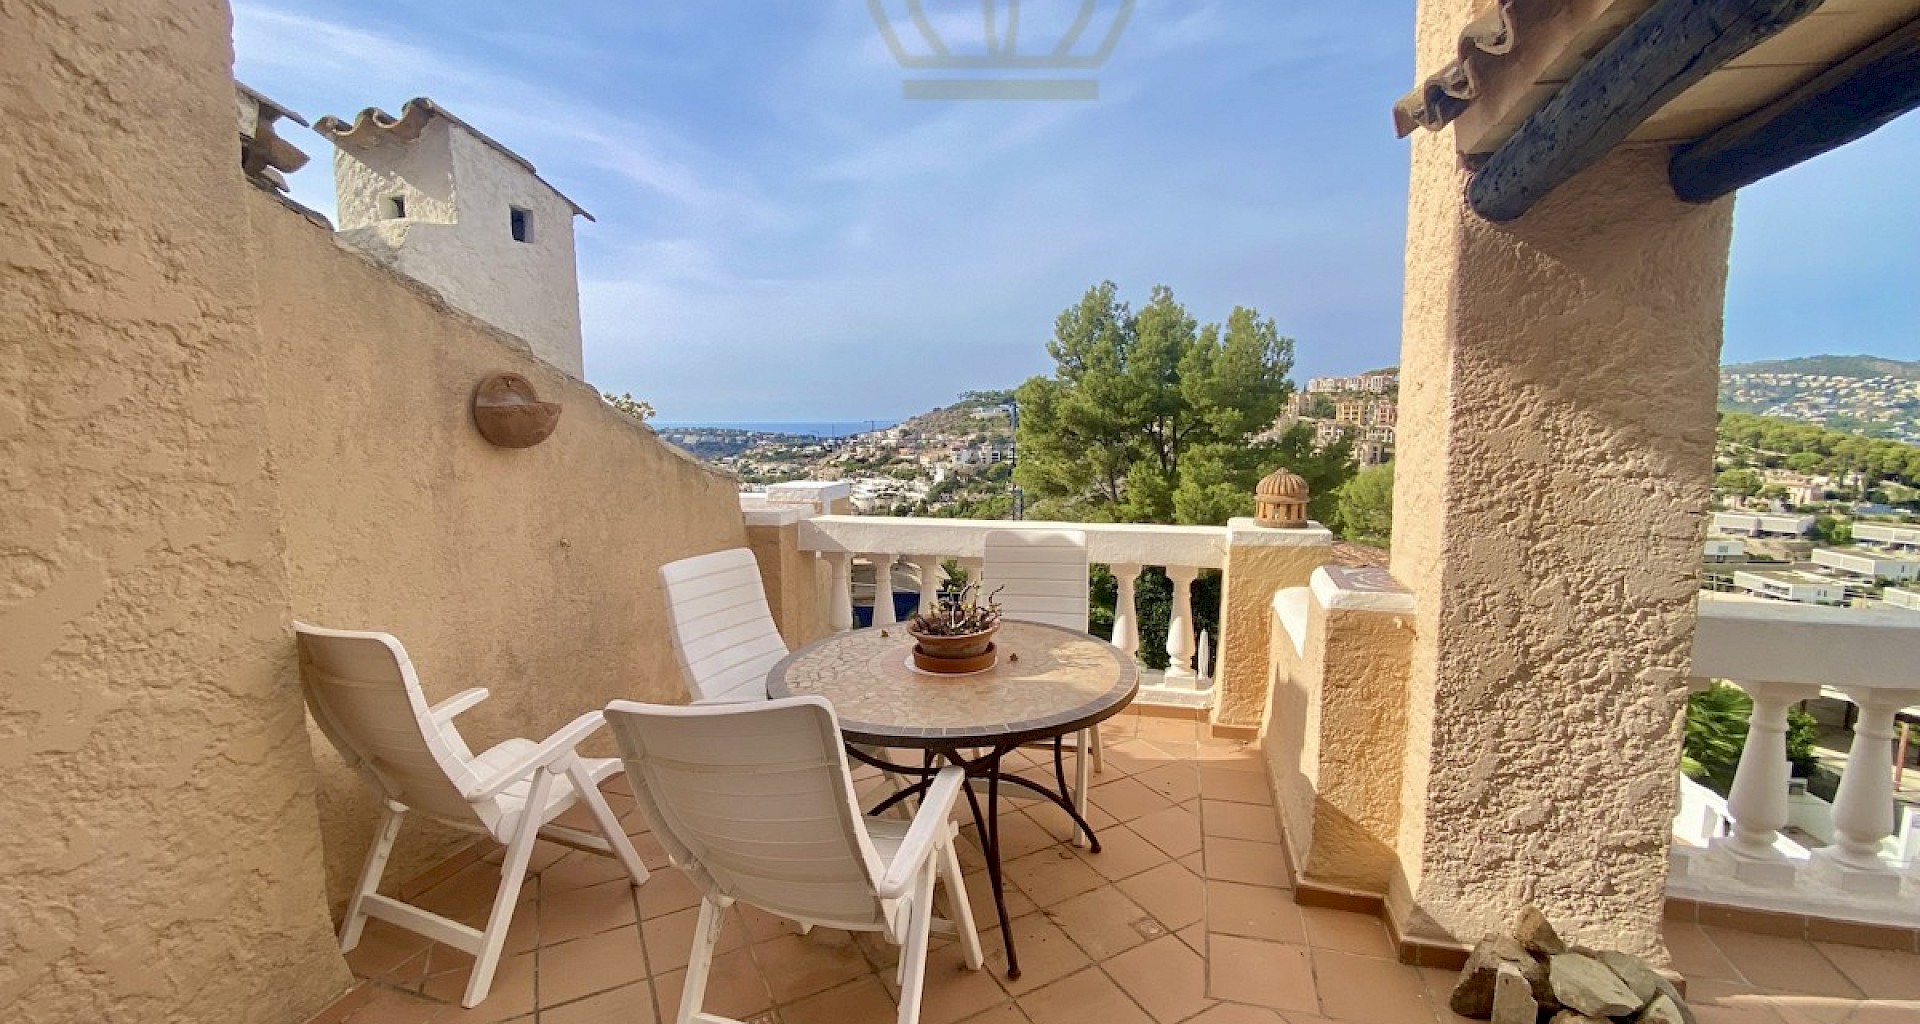 KROHN & LUEDEMANN Beautiful Mediterranean apartment in Port Andratx with partial sea view 